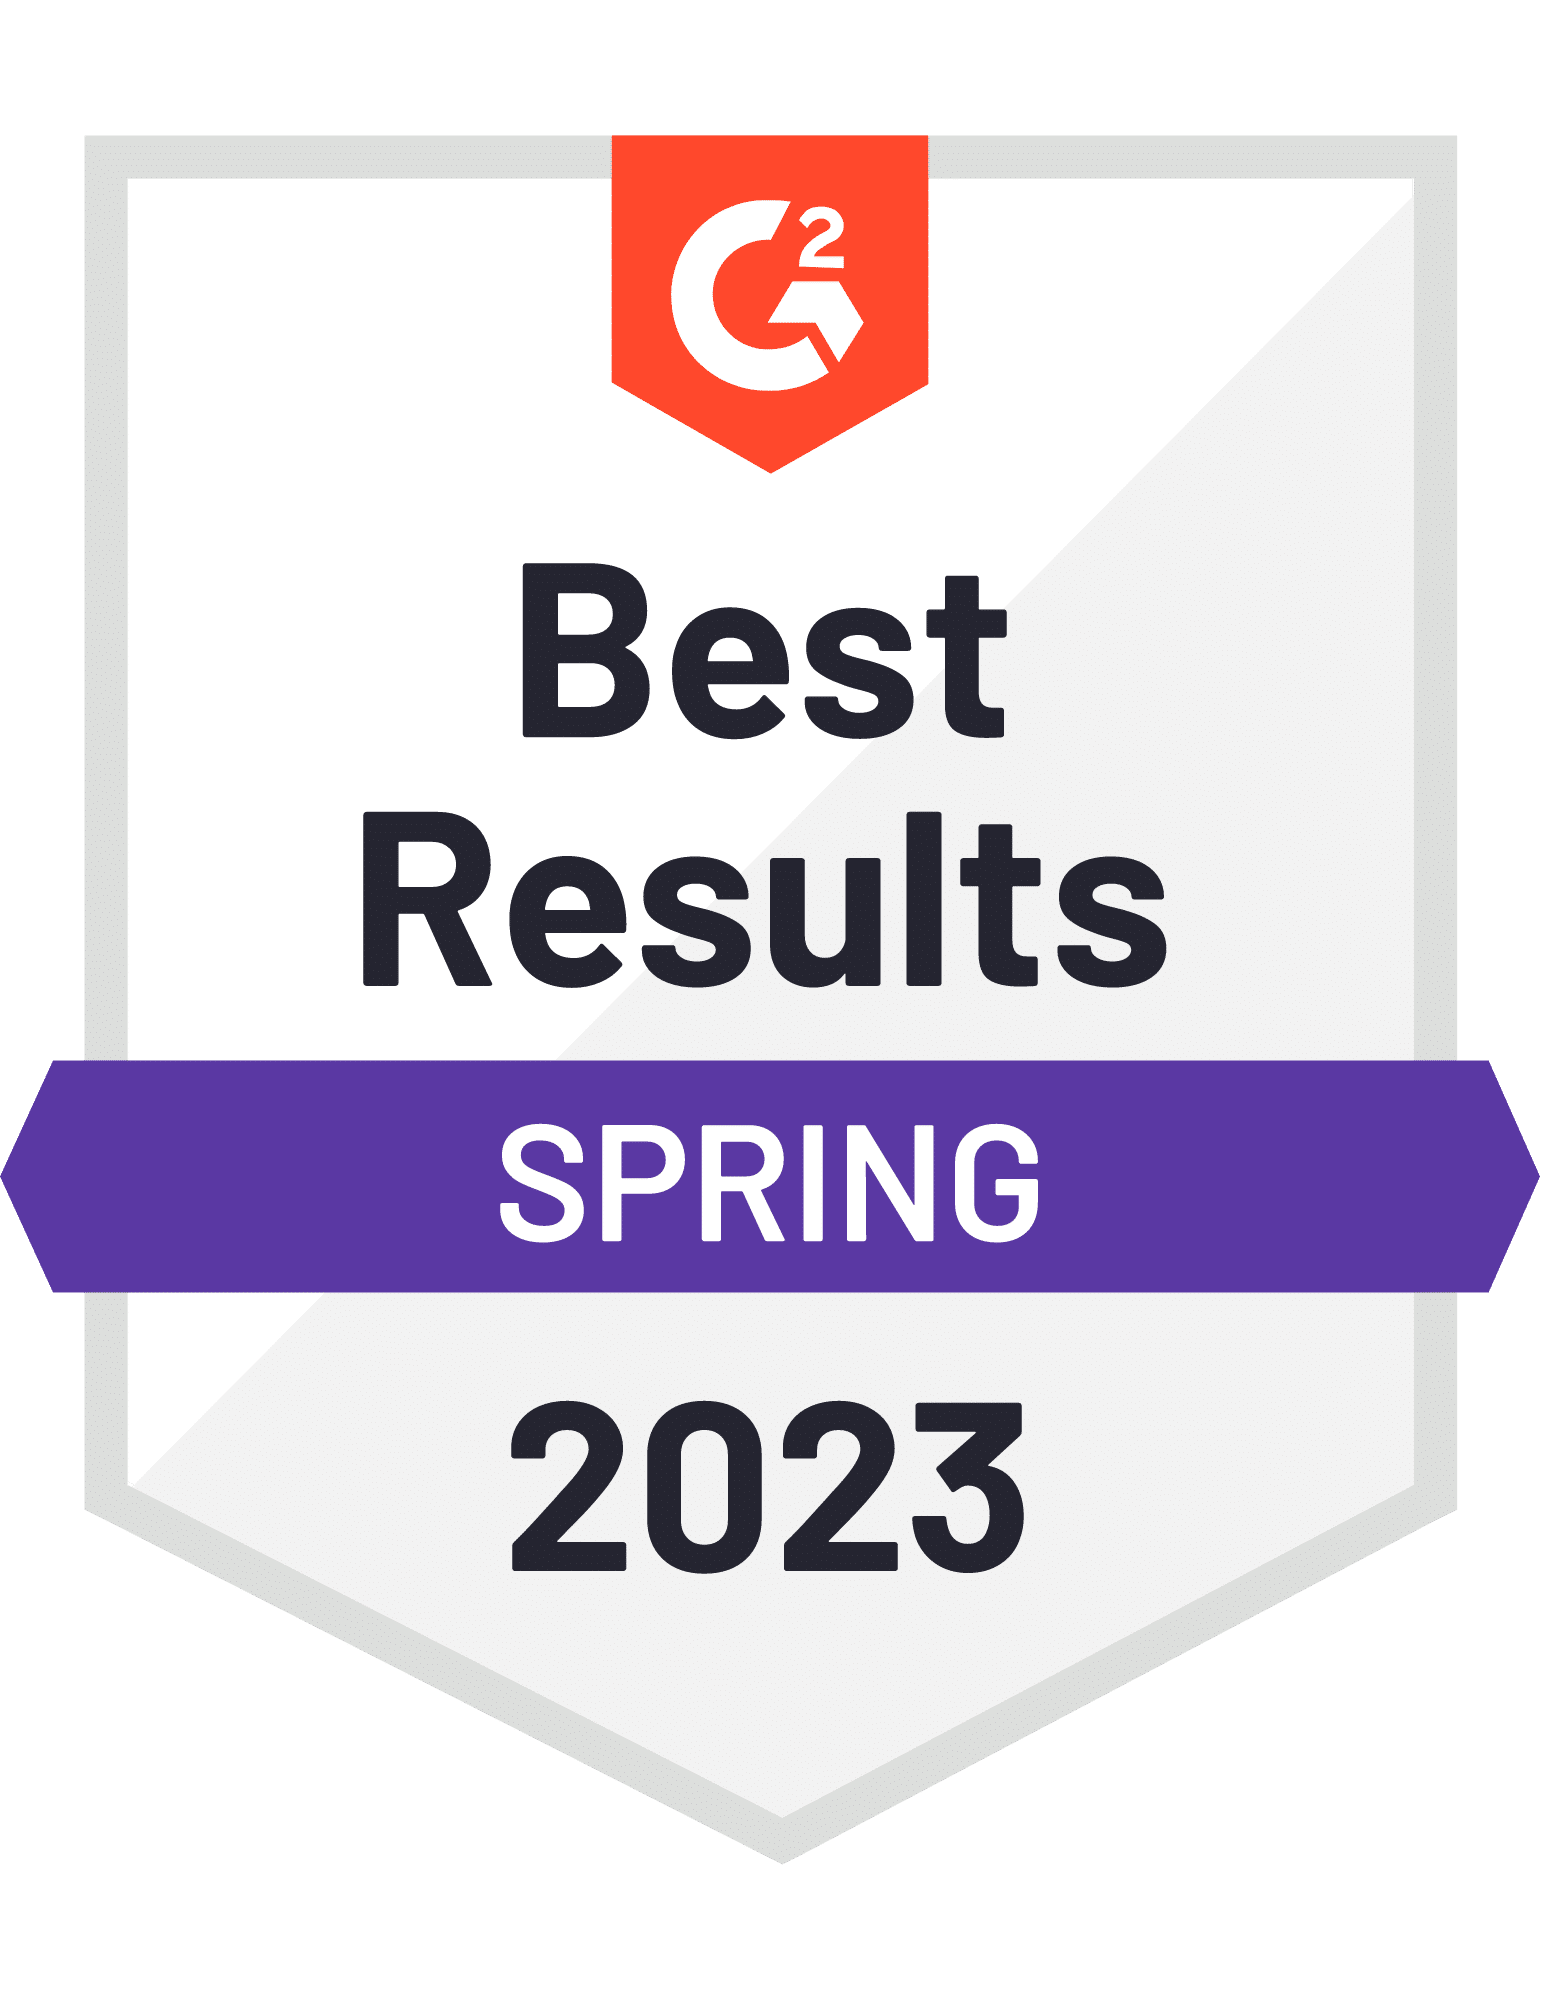 Best Results Spring 2023 G2 Award